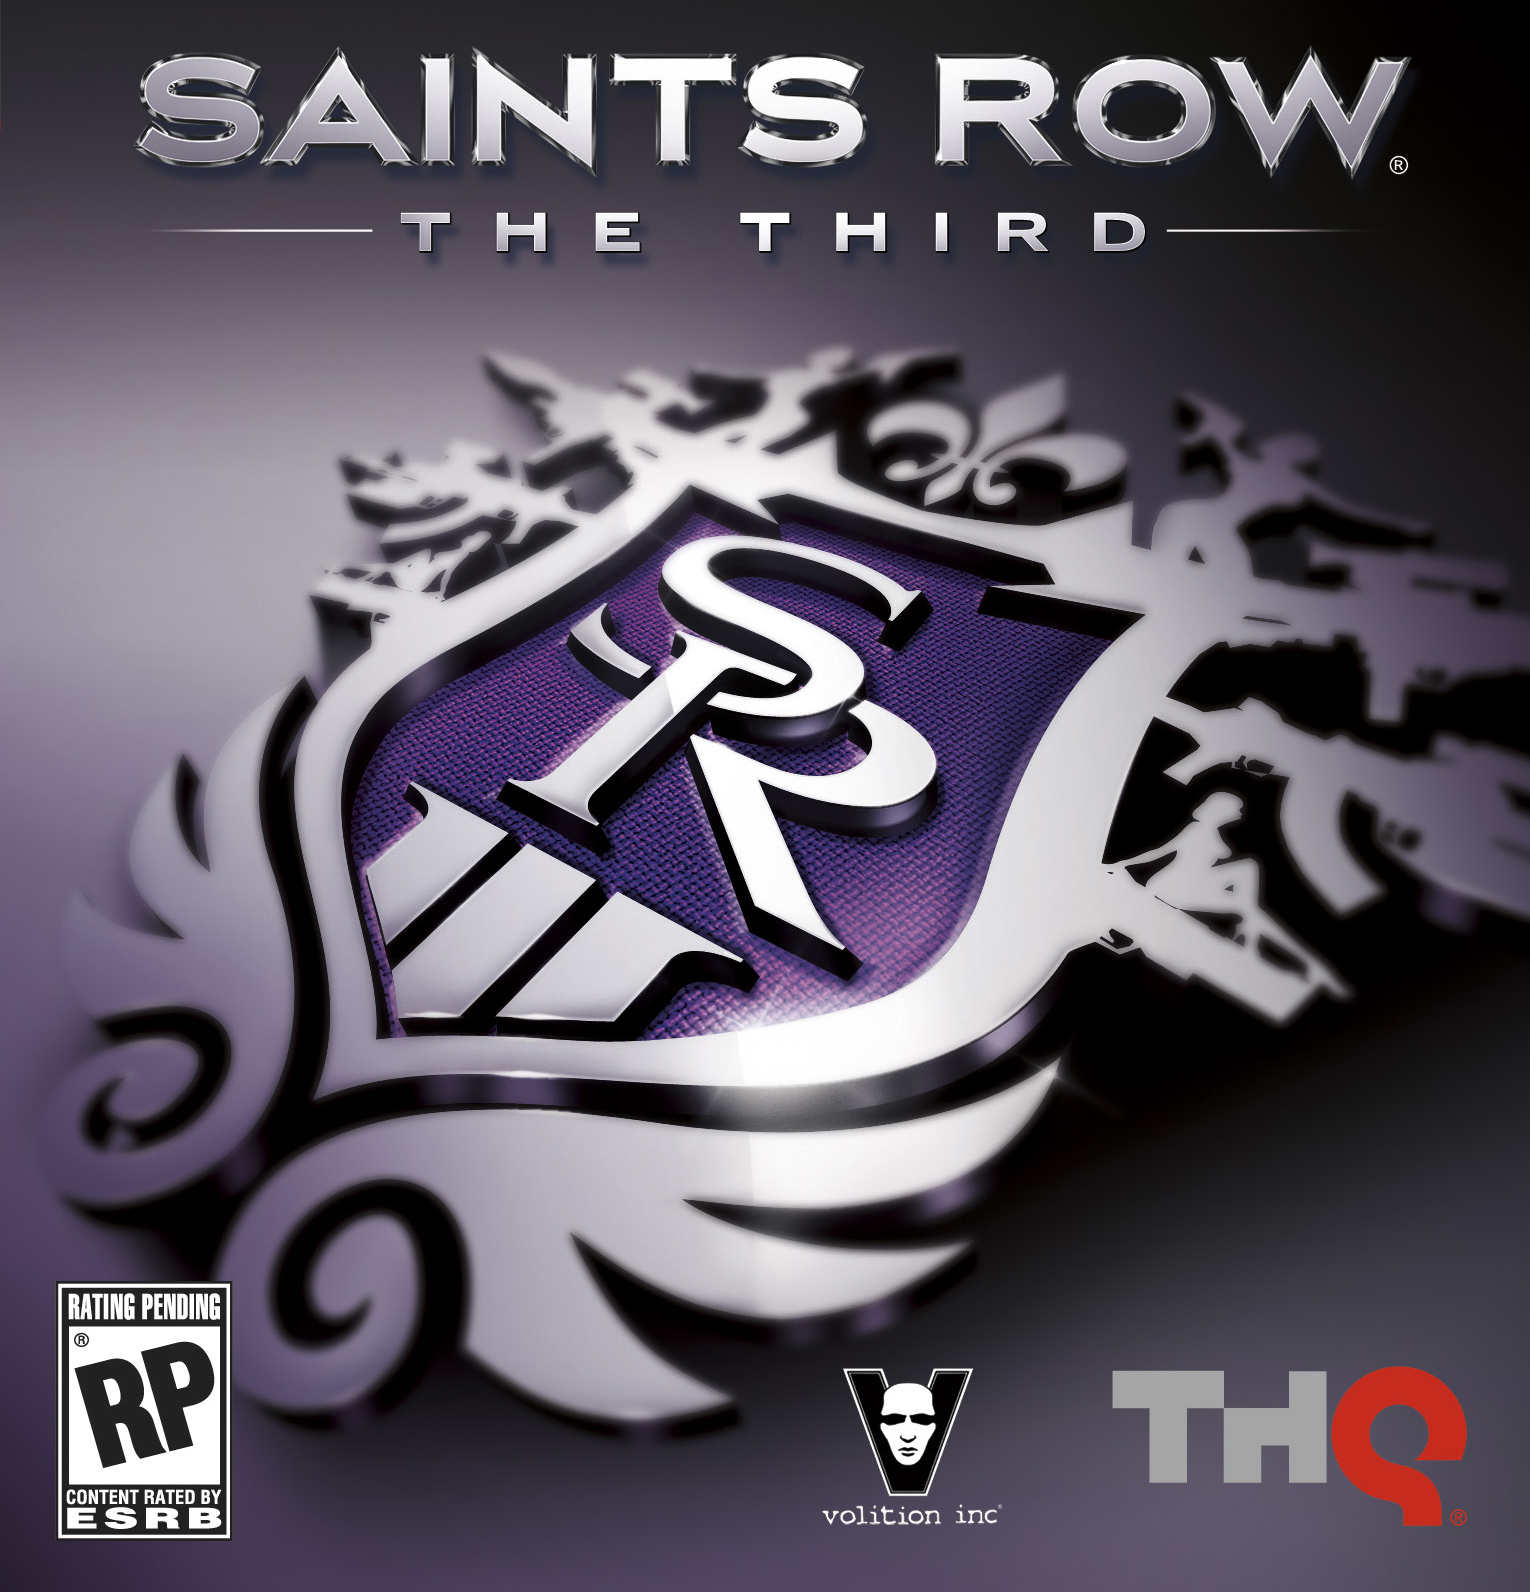 Someone said Saints Row: The Third and Saints Row IV has the worst